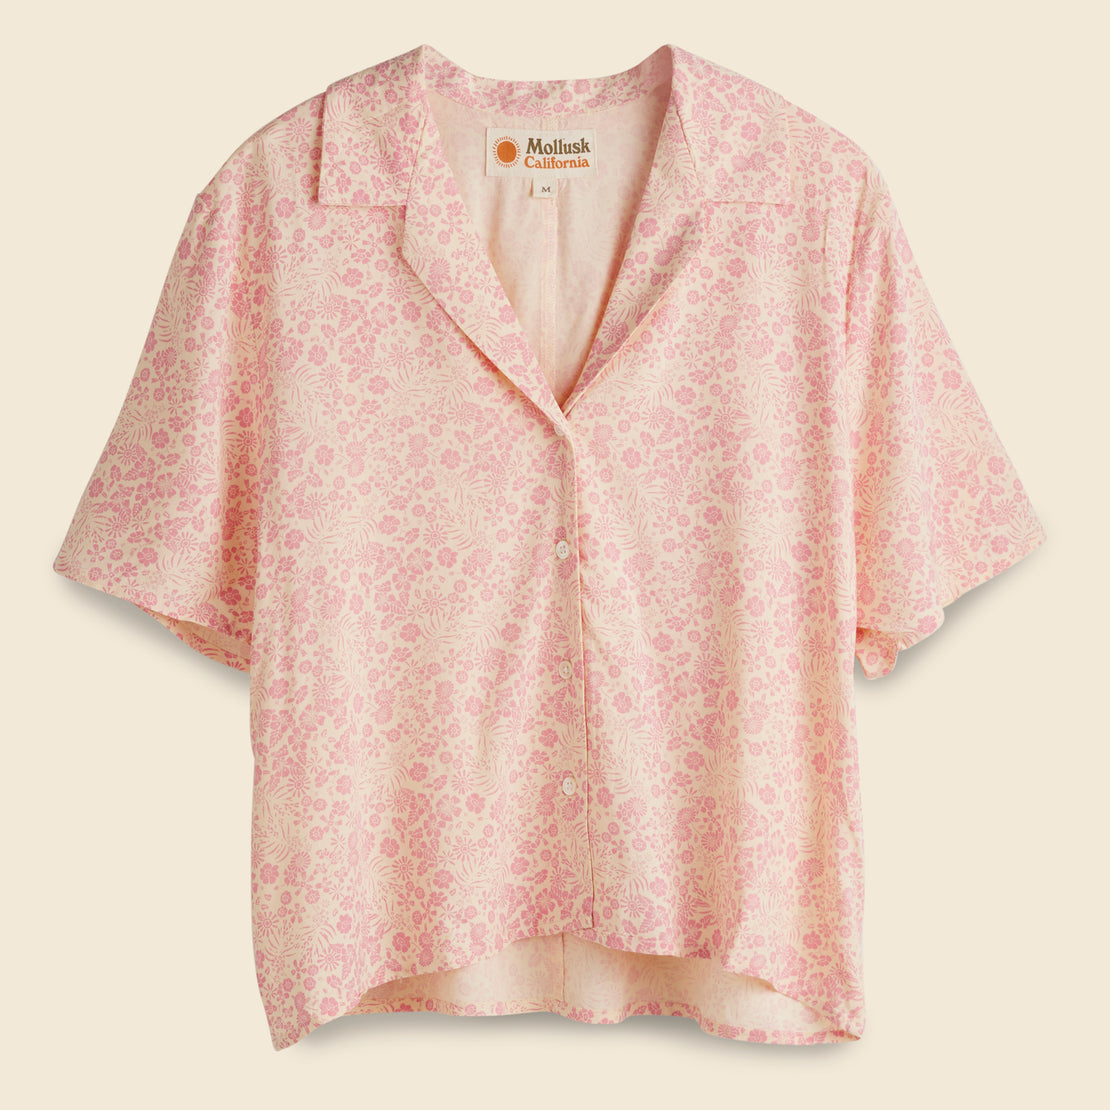 Mollusk Aloha Shirt - Pink Meadow